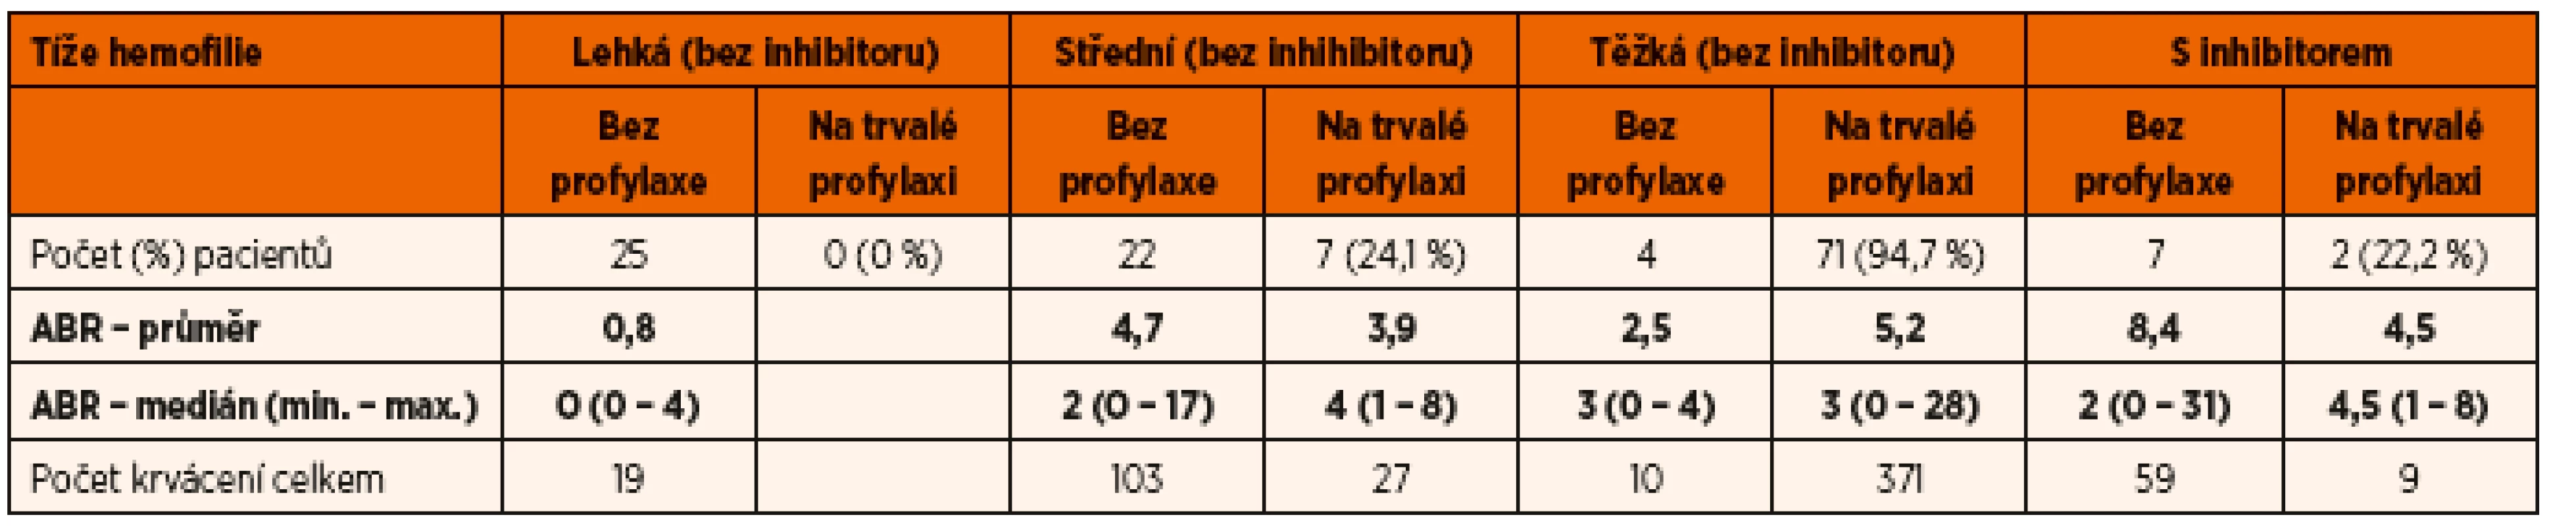 ABR (Annual Bleeding Rate) českých dětí s hemofilií (A i B) v roce 2015.